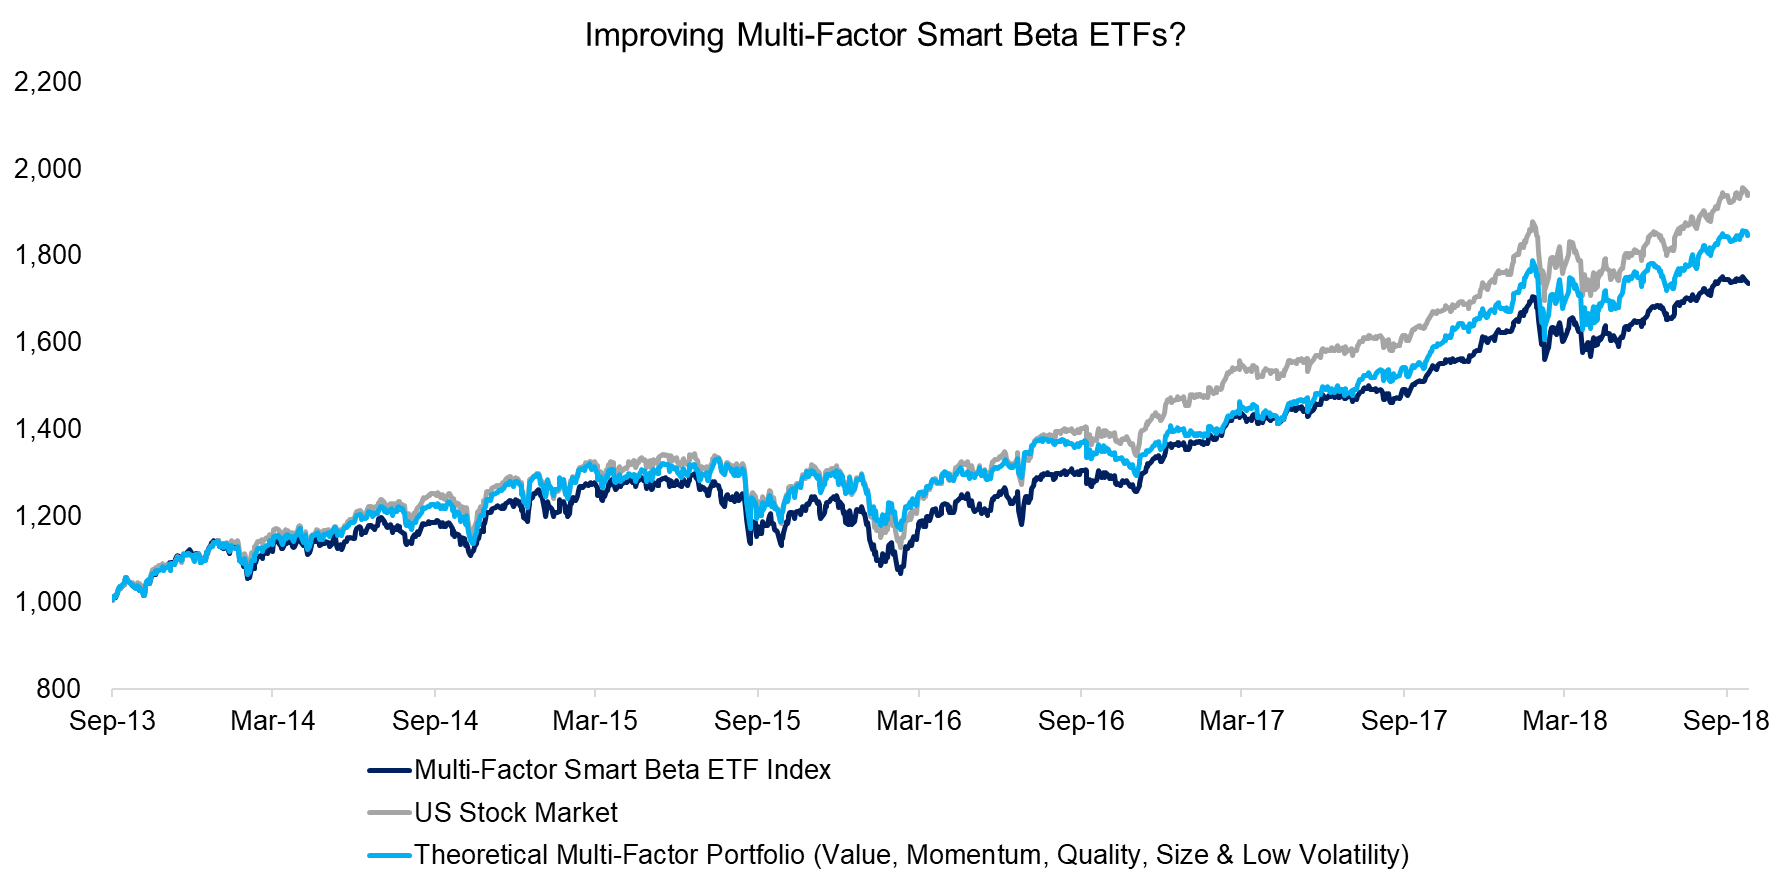 Improving Multi-Factor Smart Beta ETFs